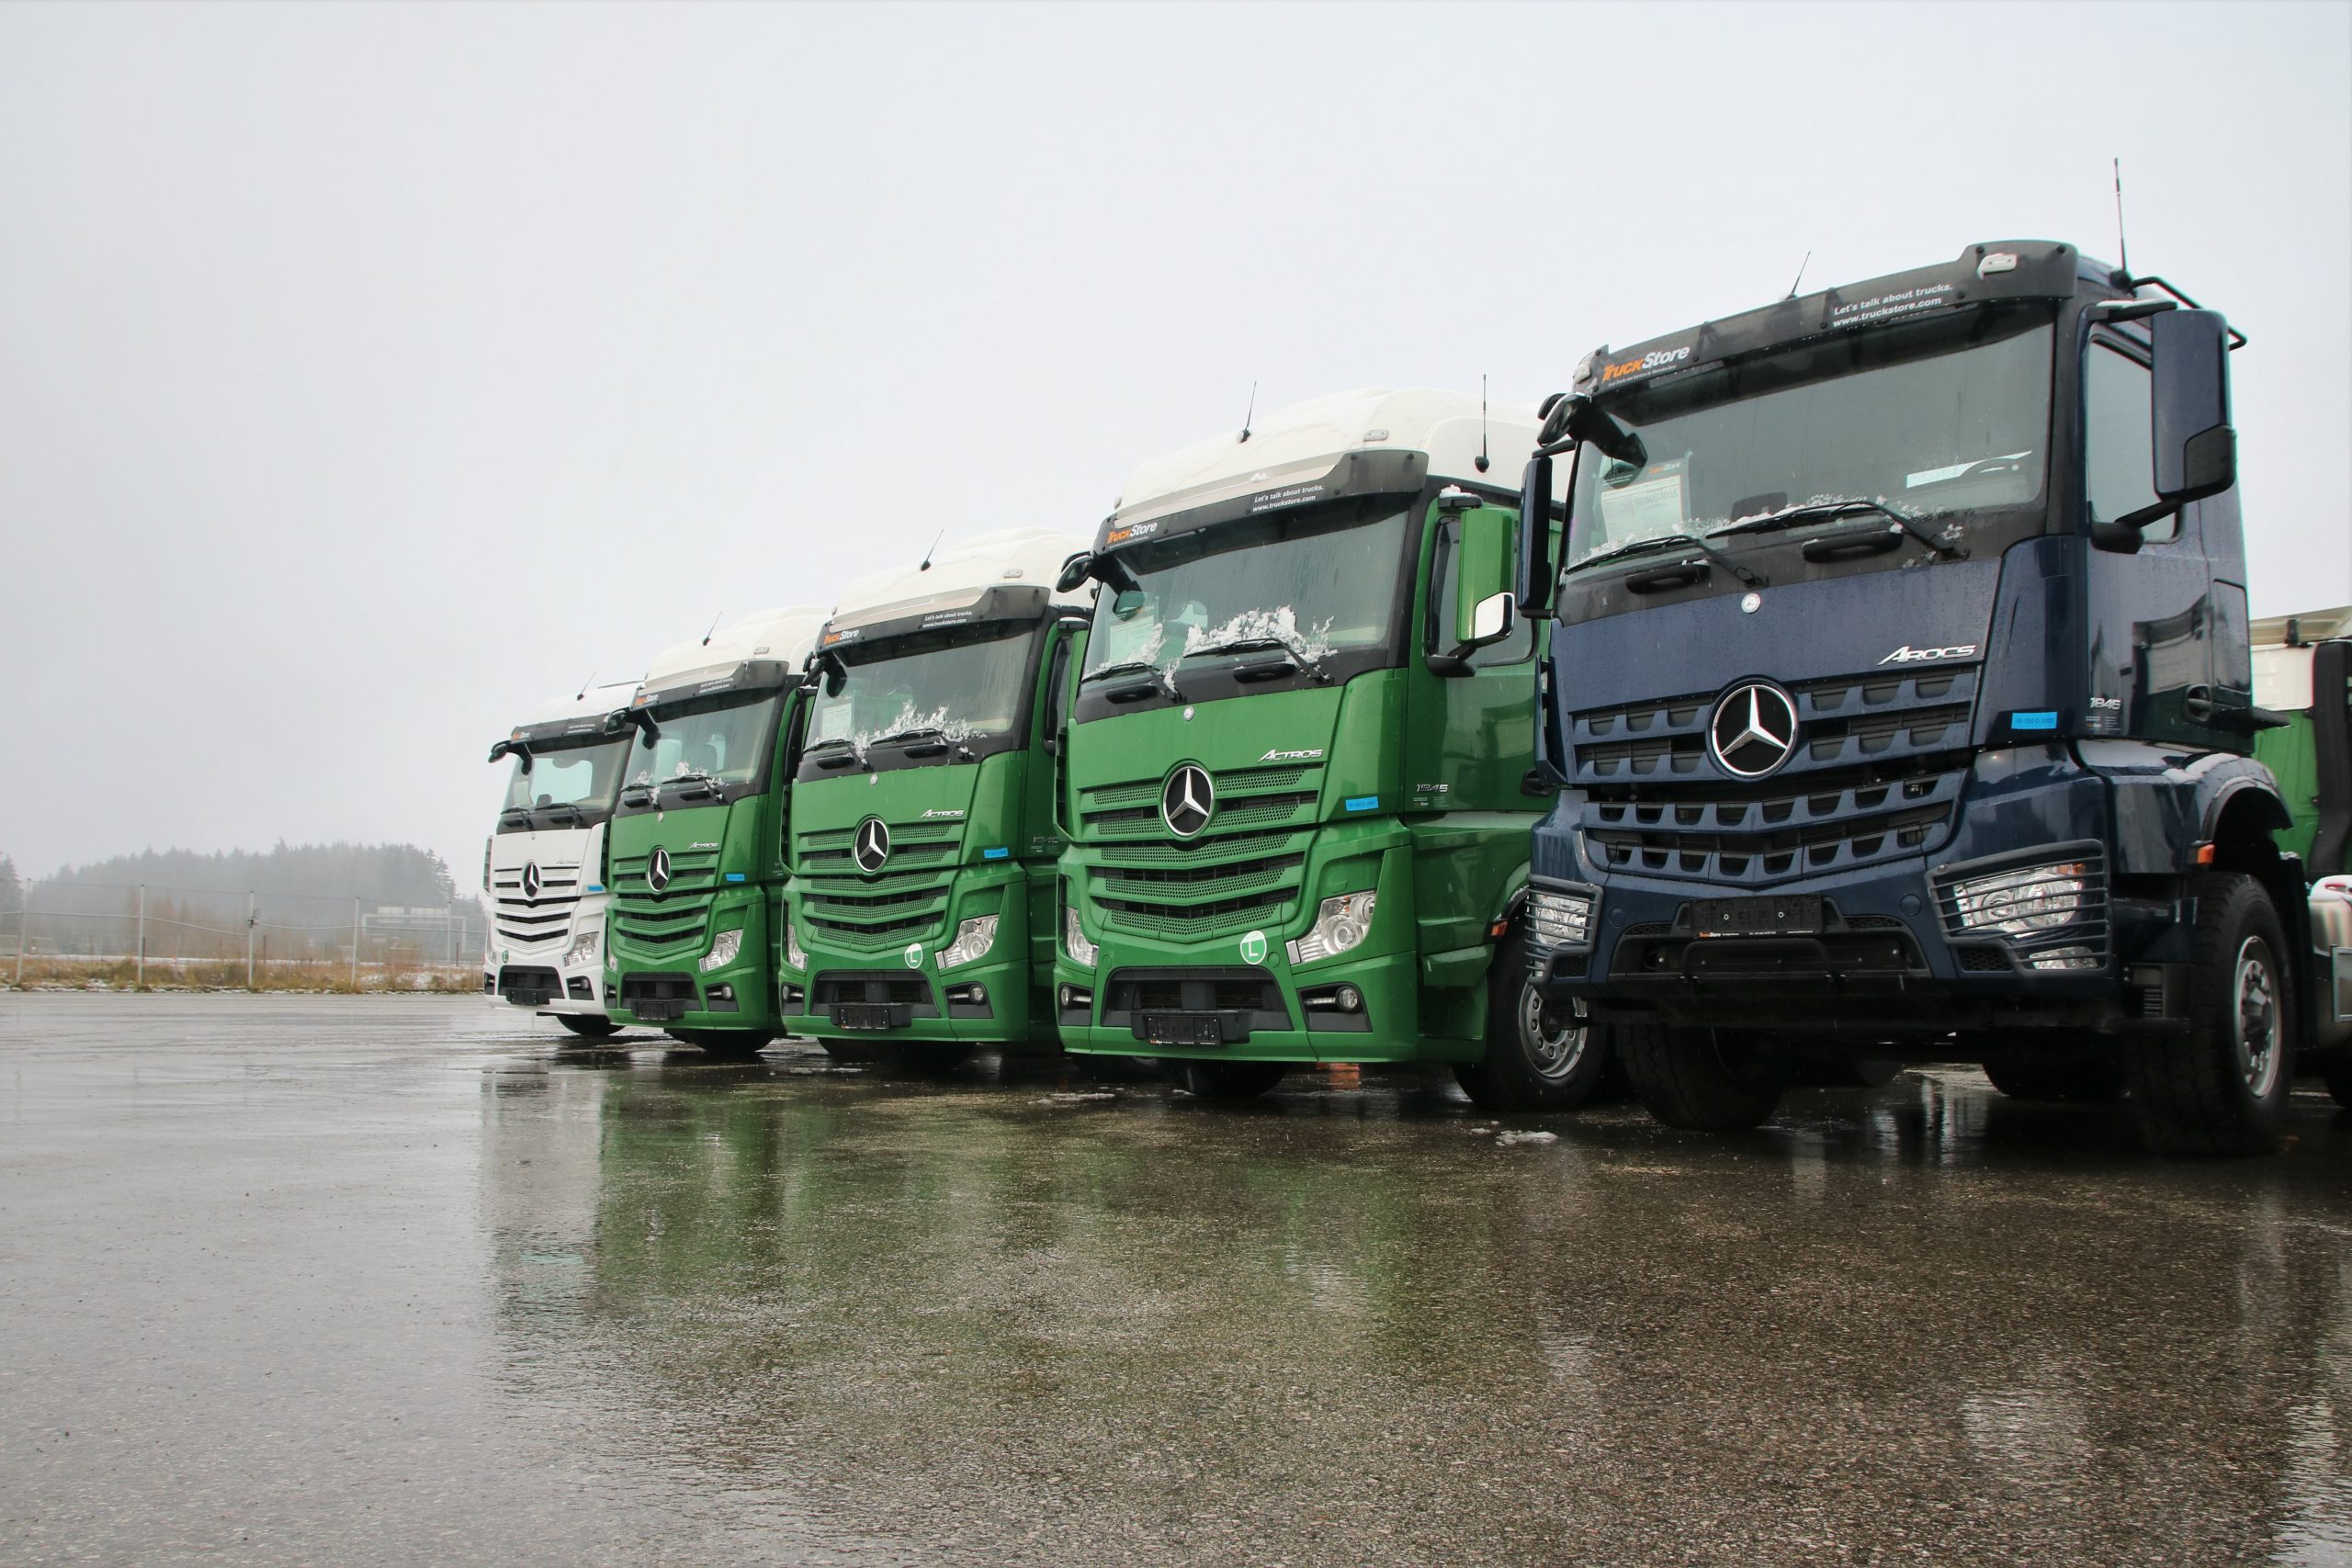 Mercedes Trucks